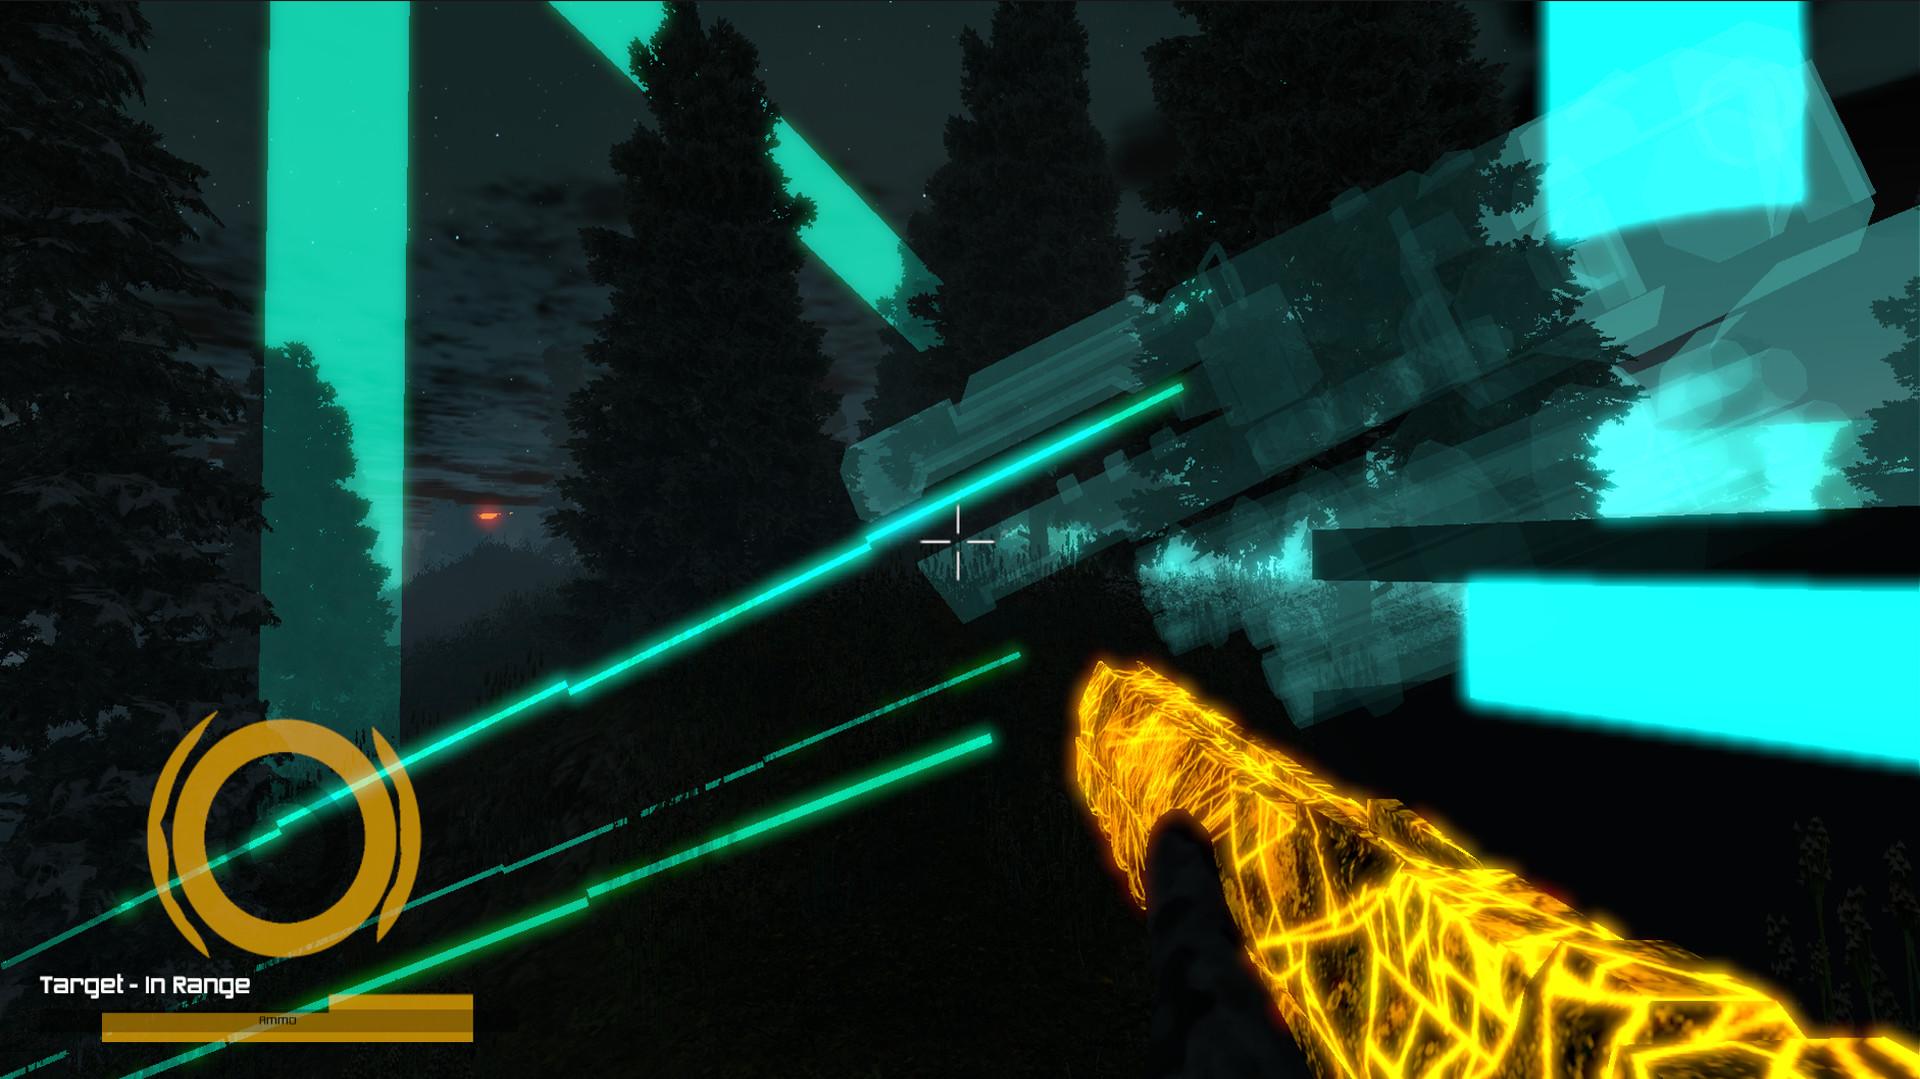 Screenshot №22 from game Endangered